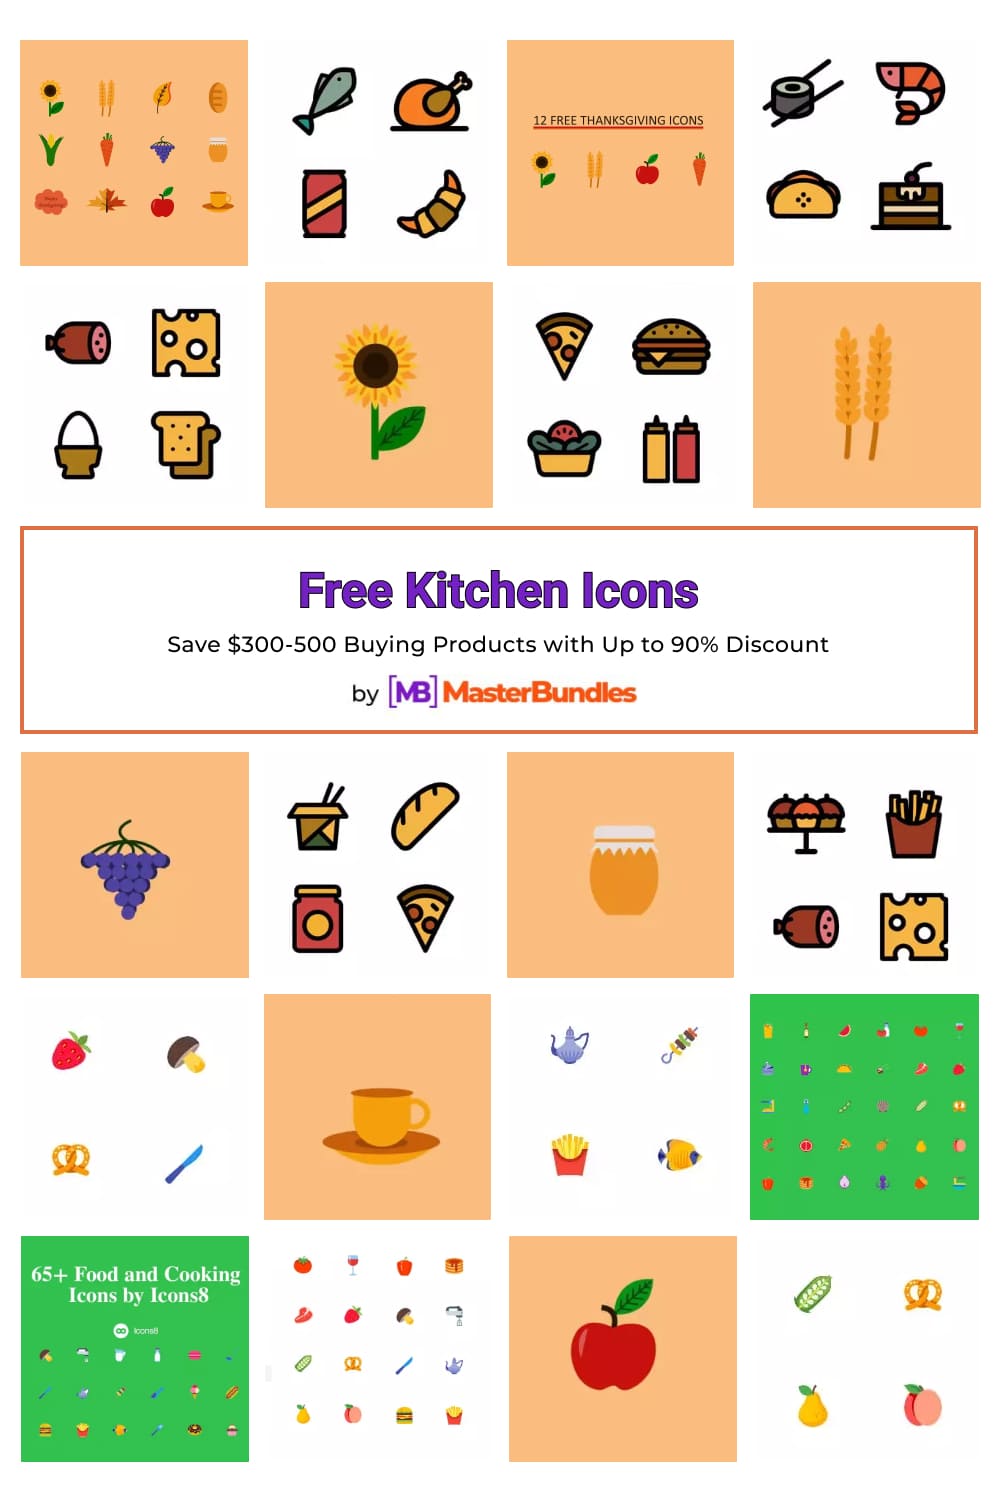 Free Kitchen Icons Pinterest image.